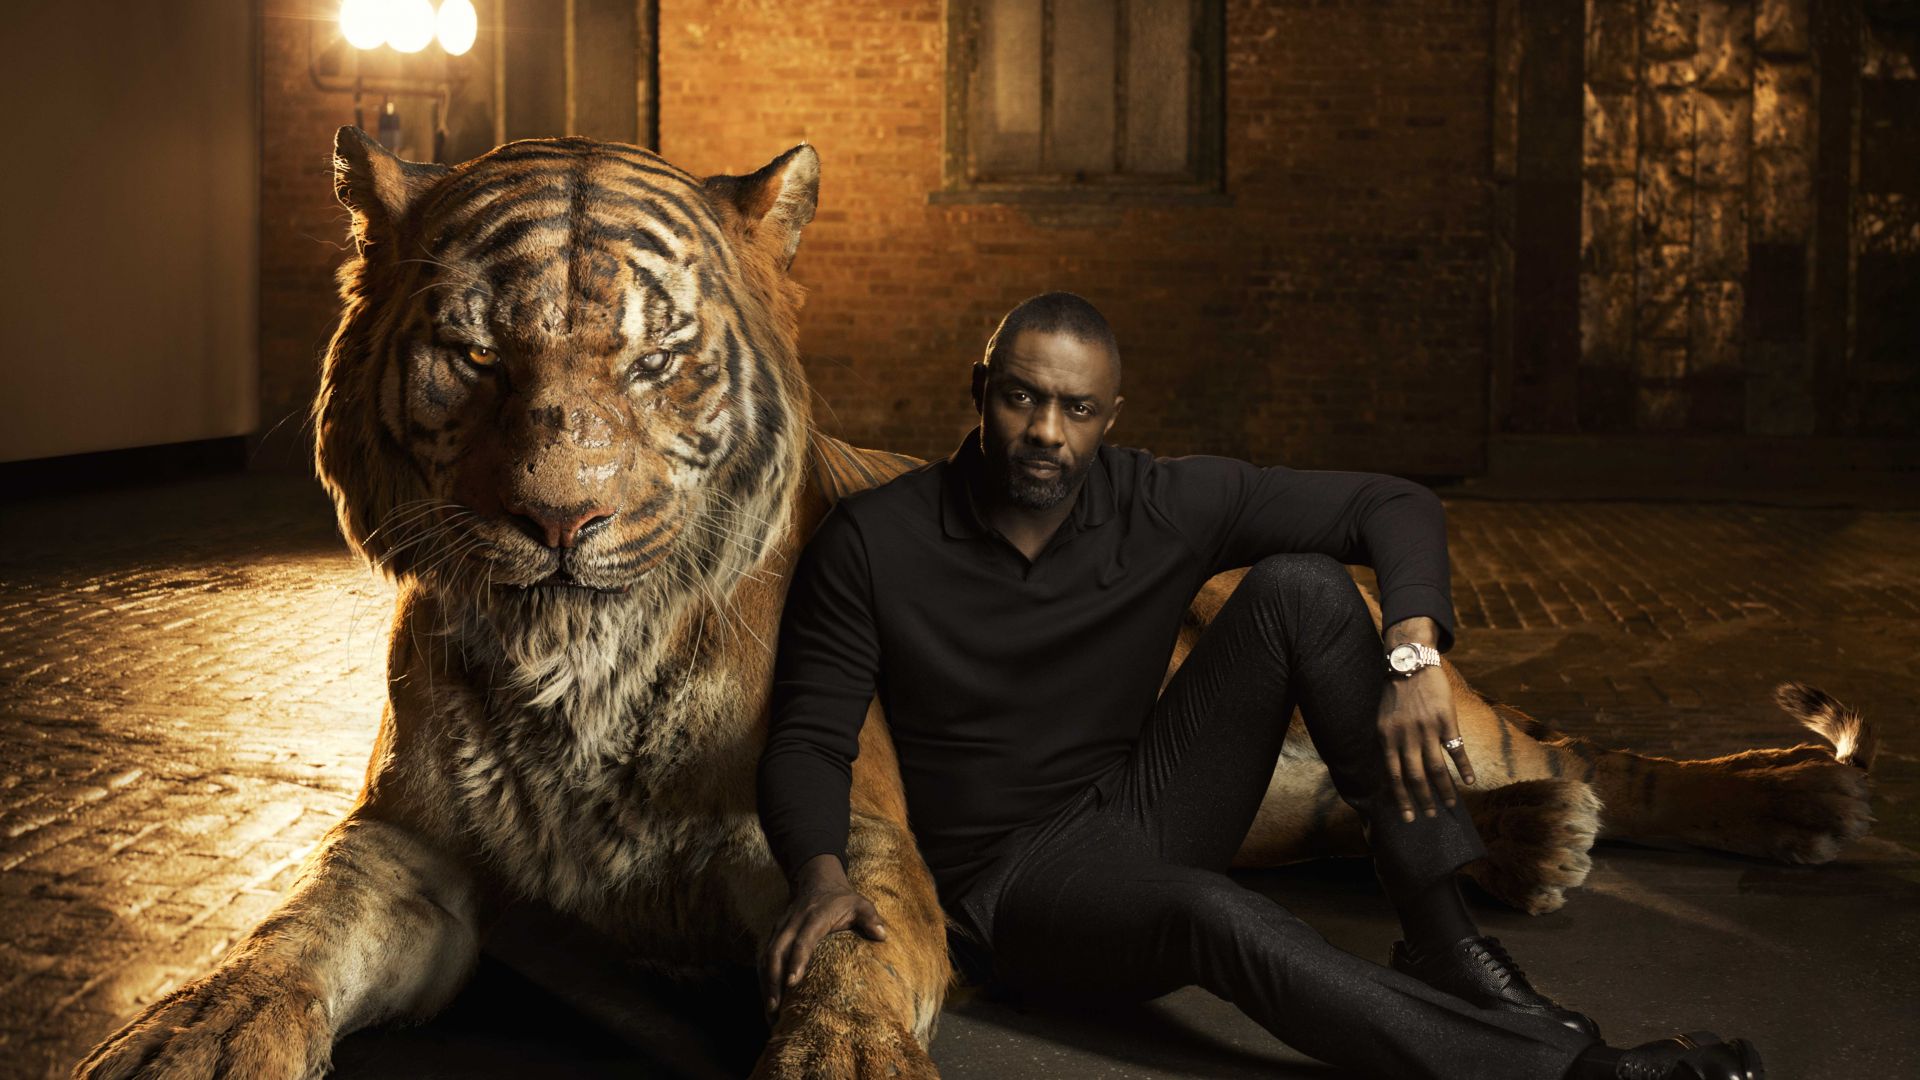 The Jungle Book, Idris Elba, Shere Khan, adventure, fantasy, Best movies of 2016 (horizontal)